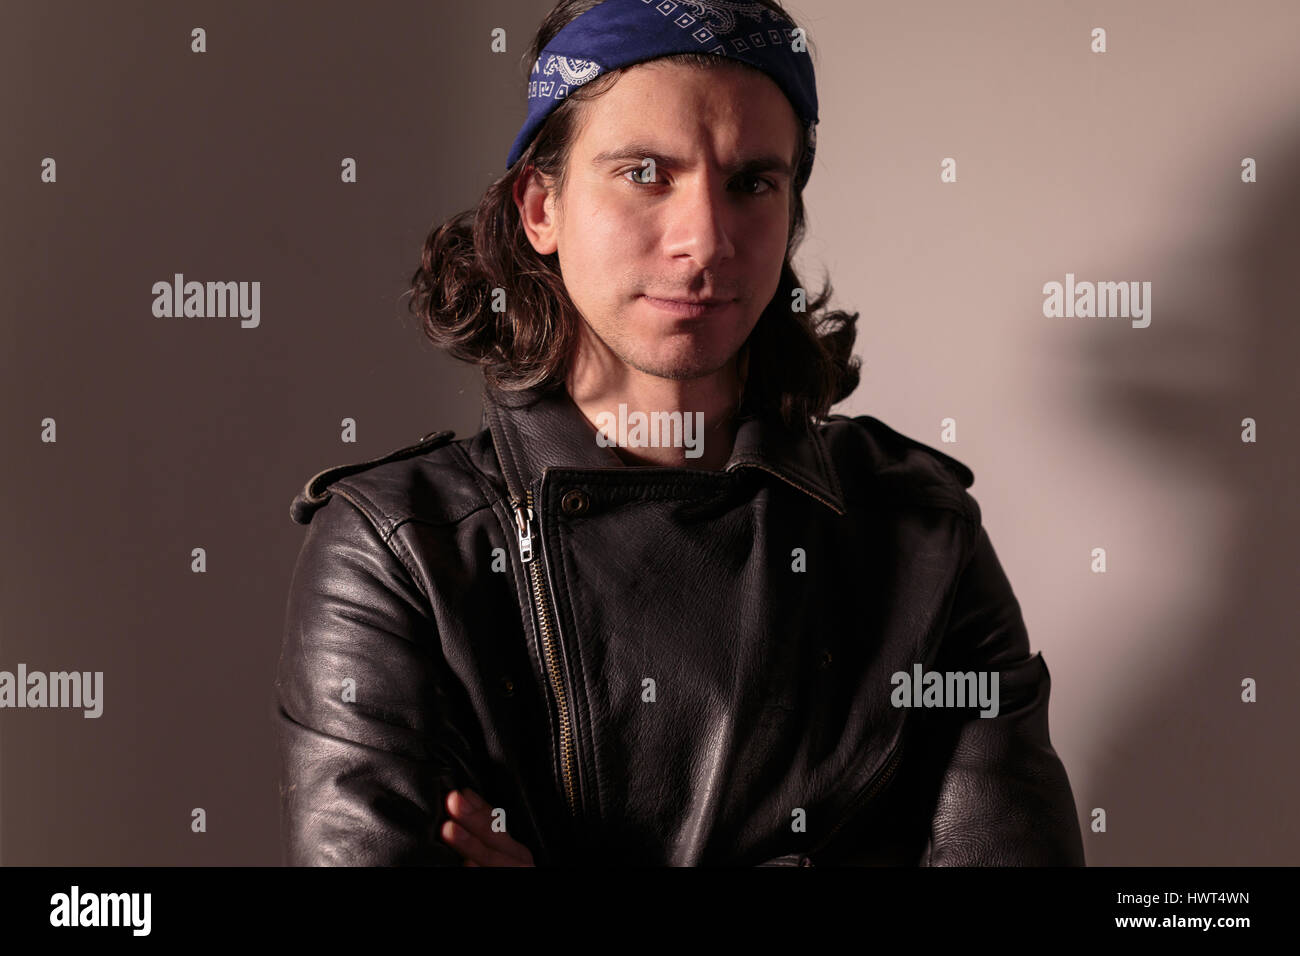 Man long hair bandana hi-res stock photography and images - Alamy